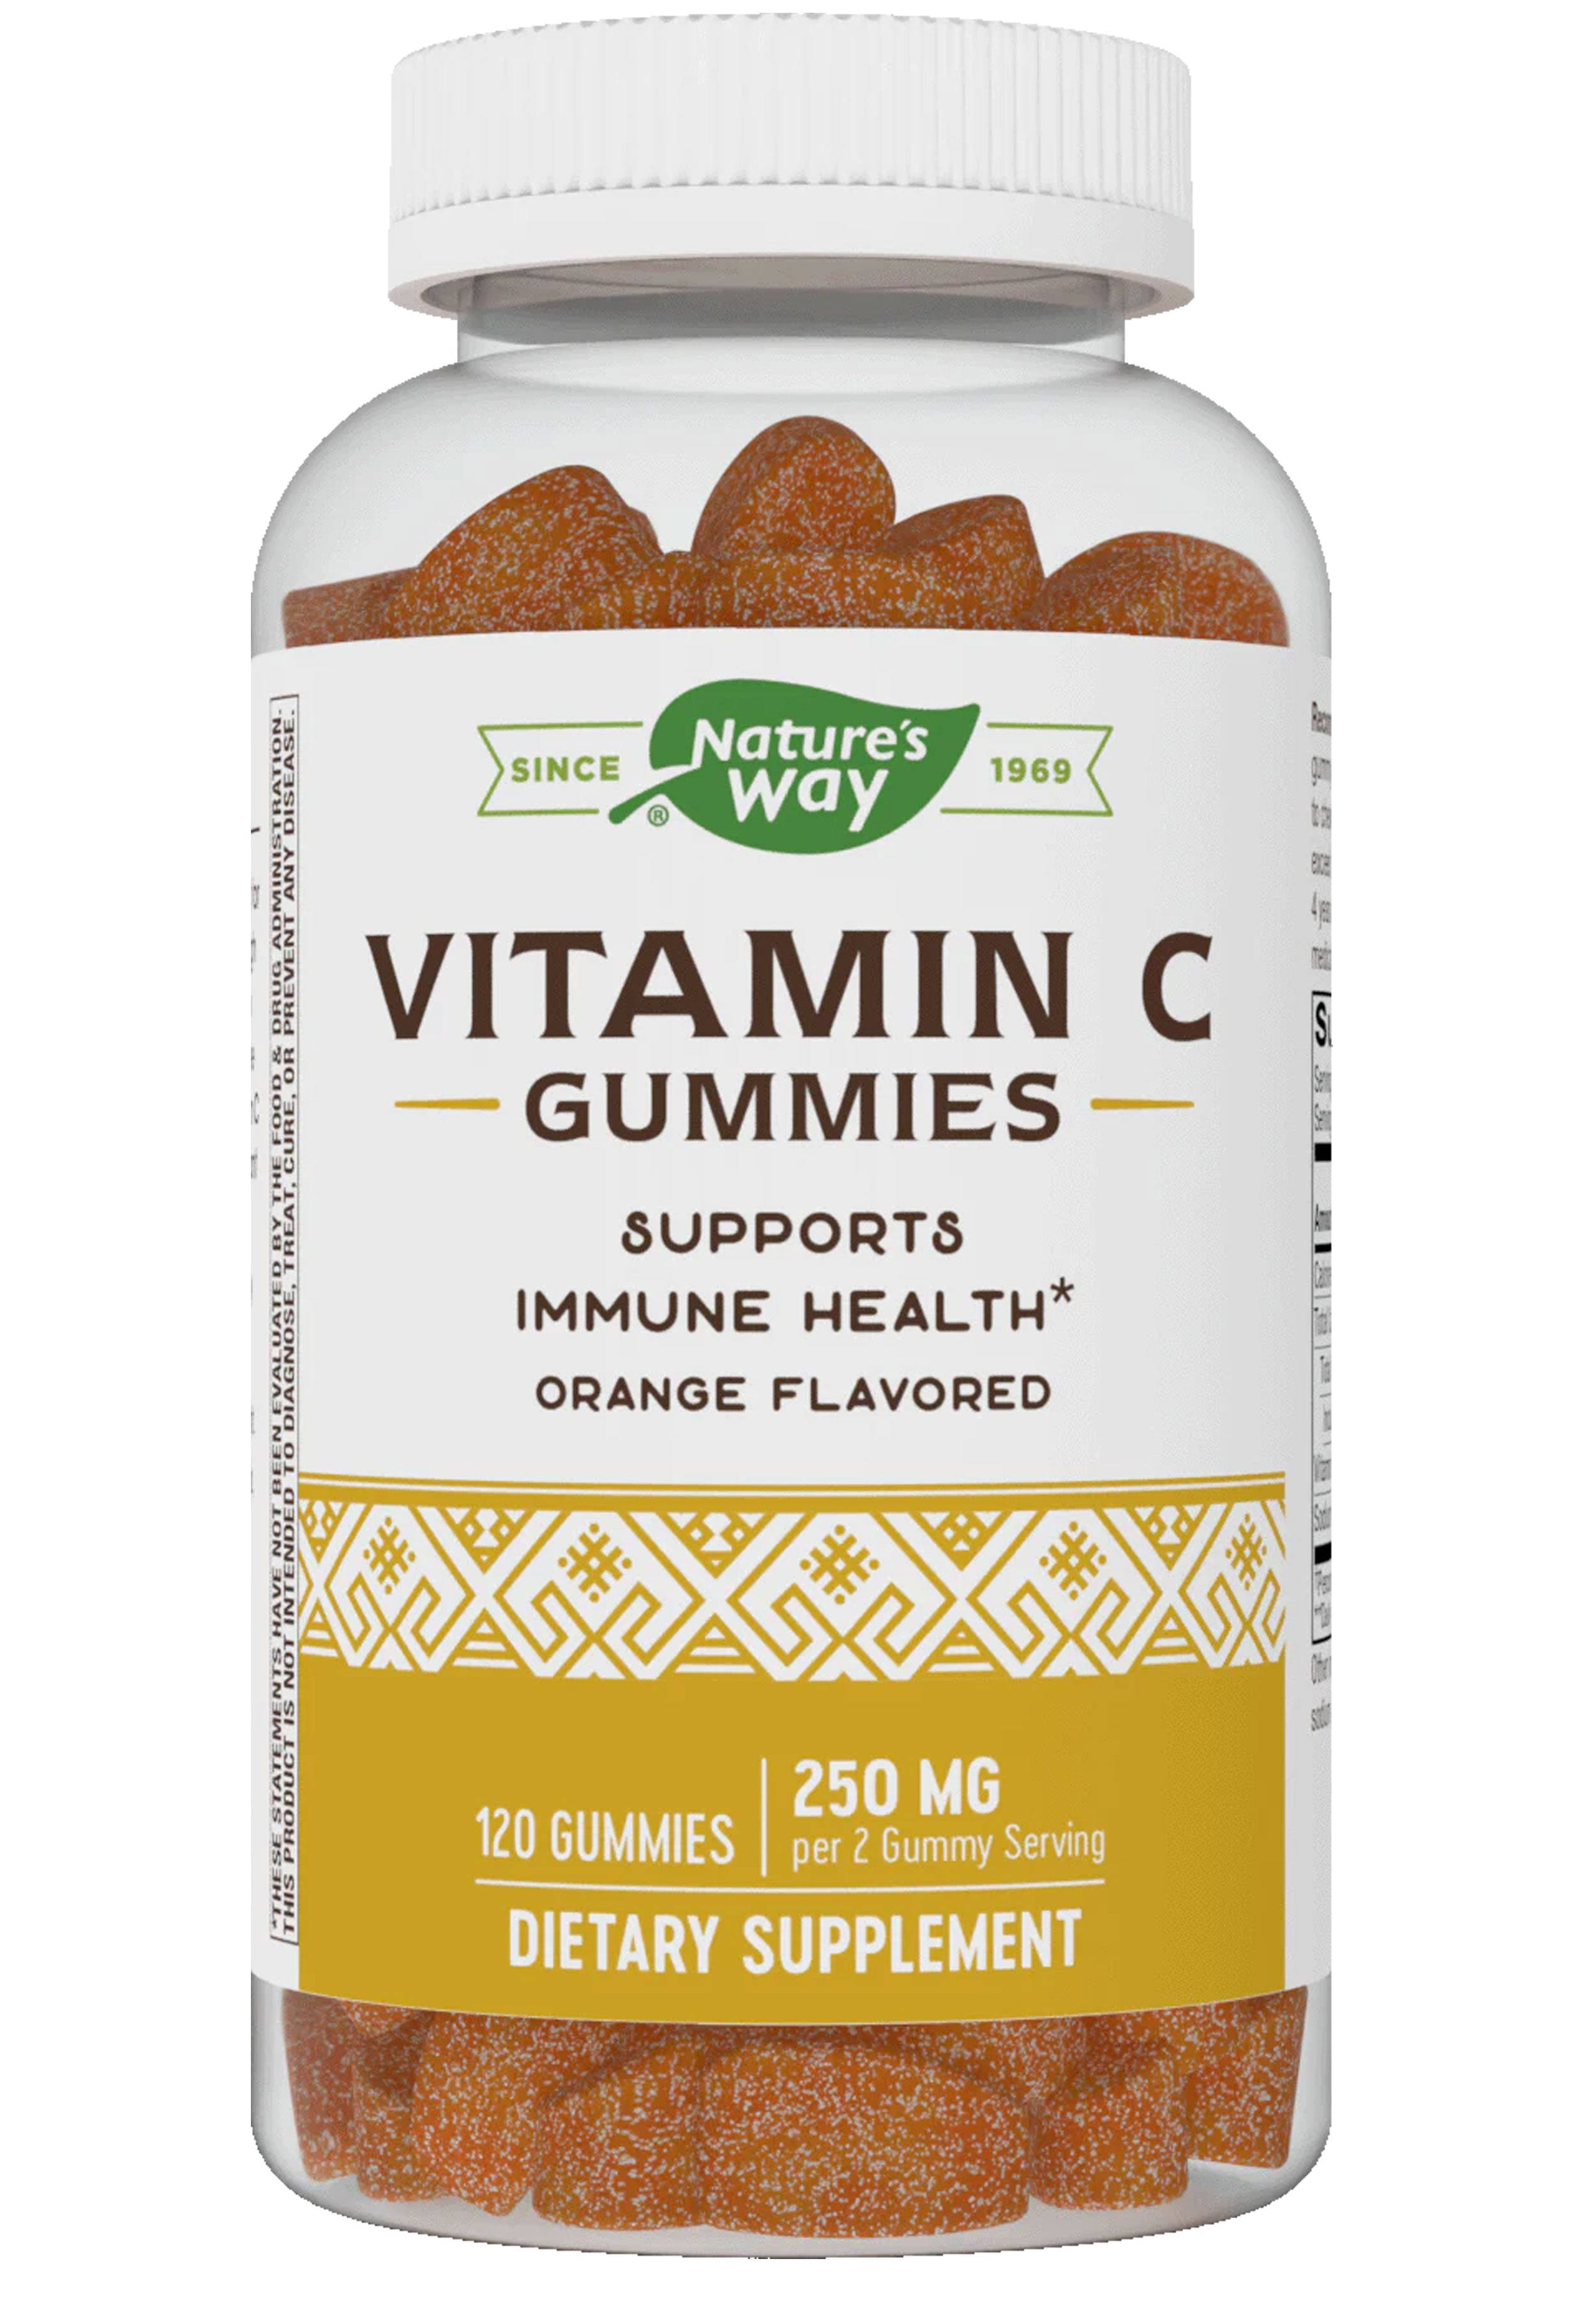 Nature's Way Vitamin C, Orange Flavored, 250 mg, Gummies - 120 gummies